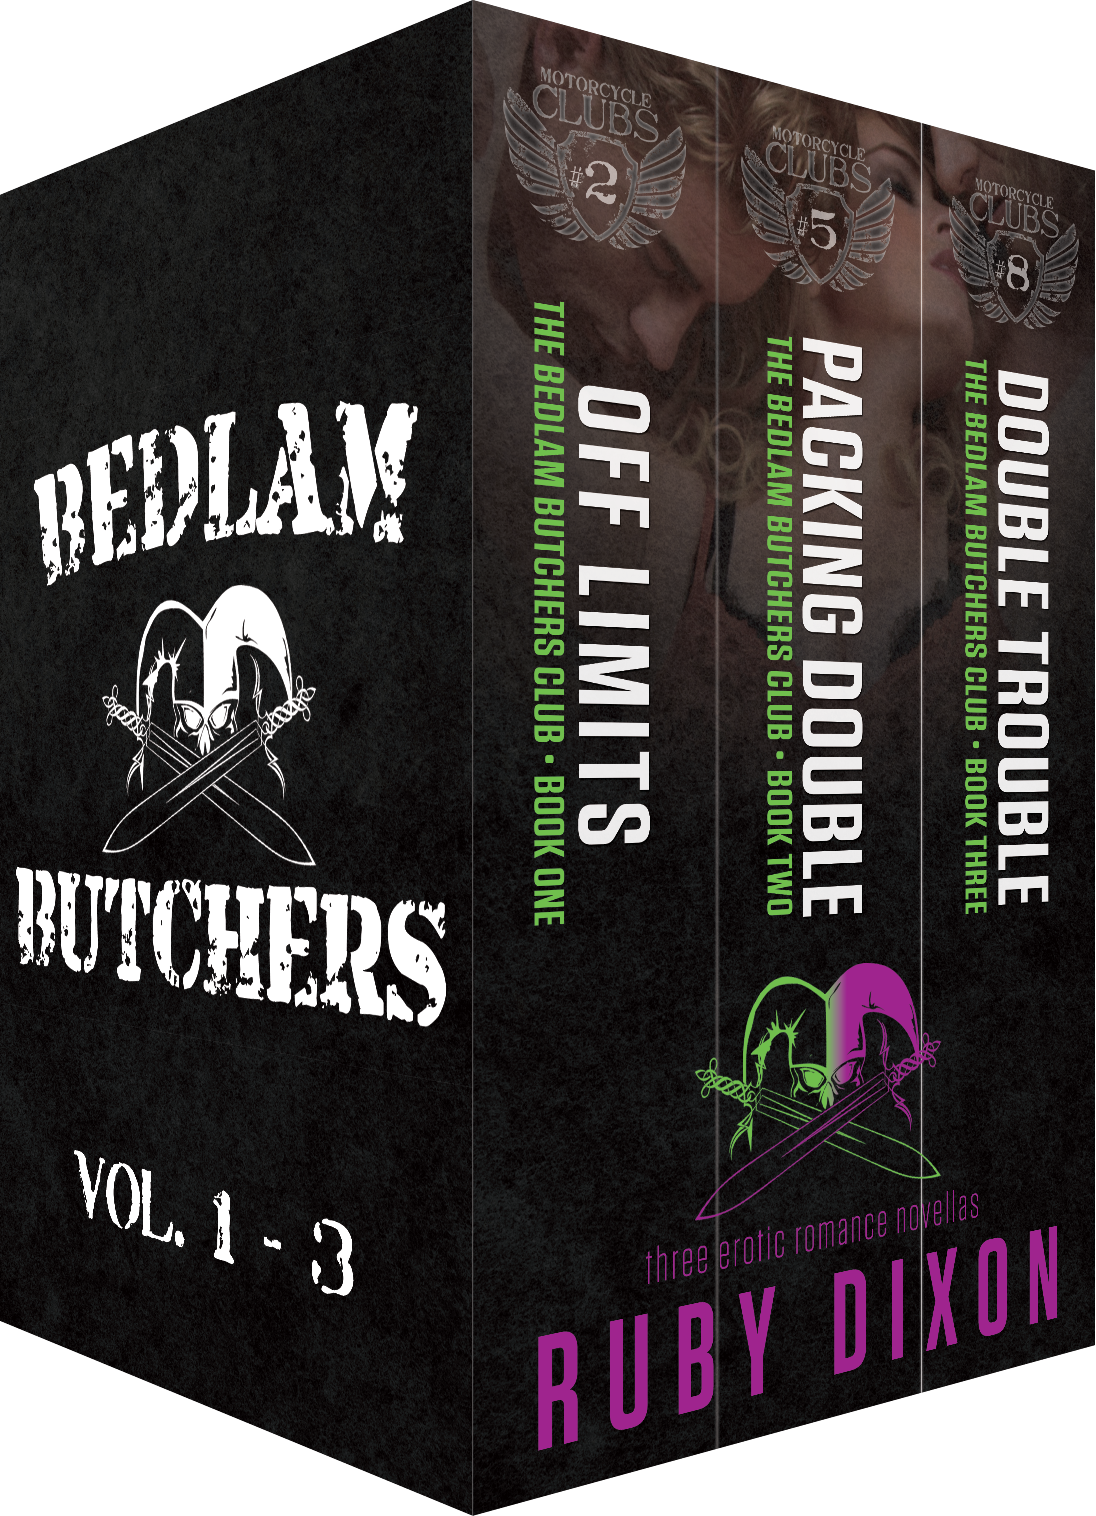 The Bedlam Butchers, Volumes 1-3